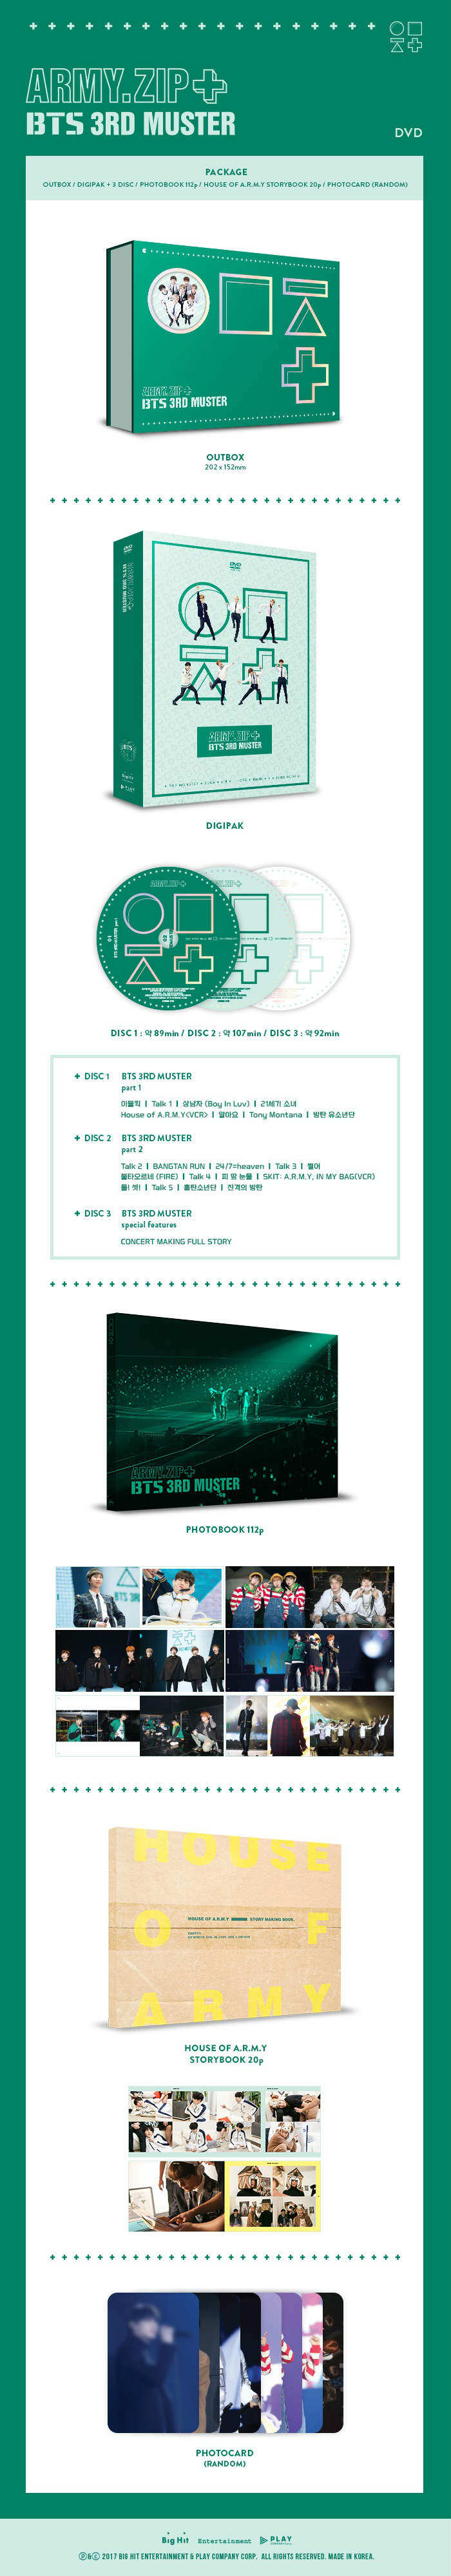 BTS - BTS 3rd MUSTER [ARMY.ZIP+] DVD